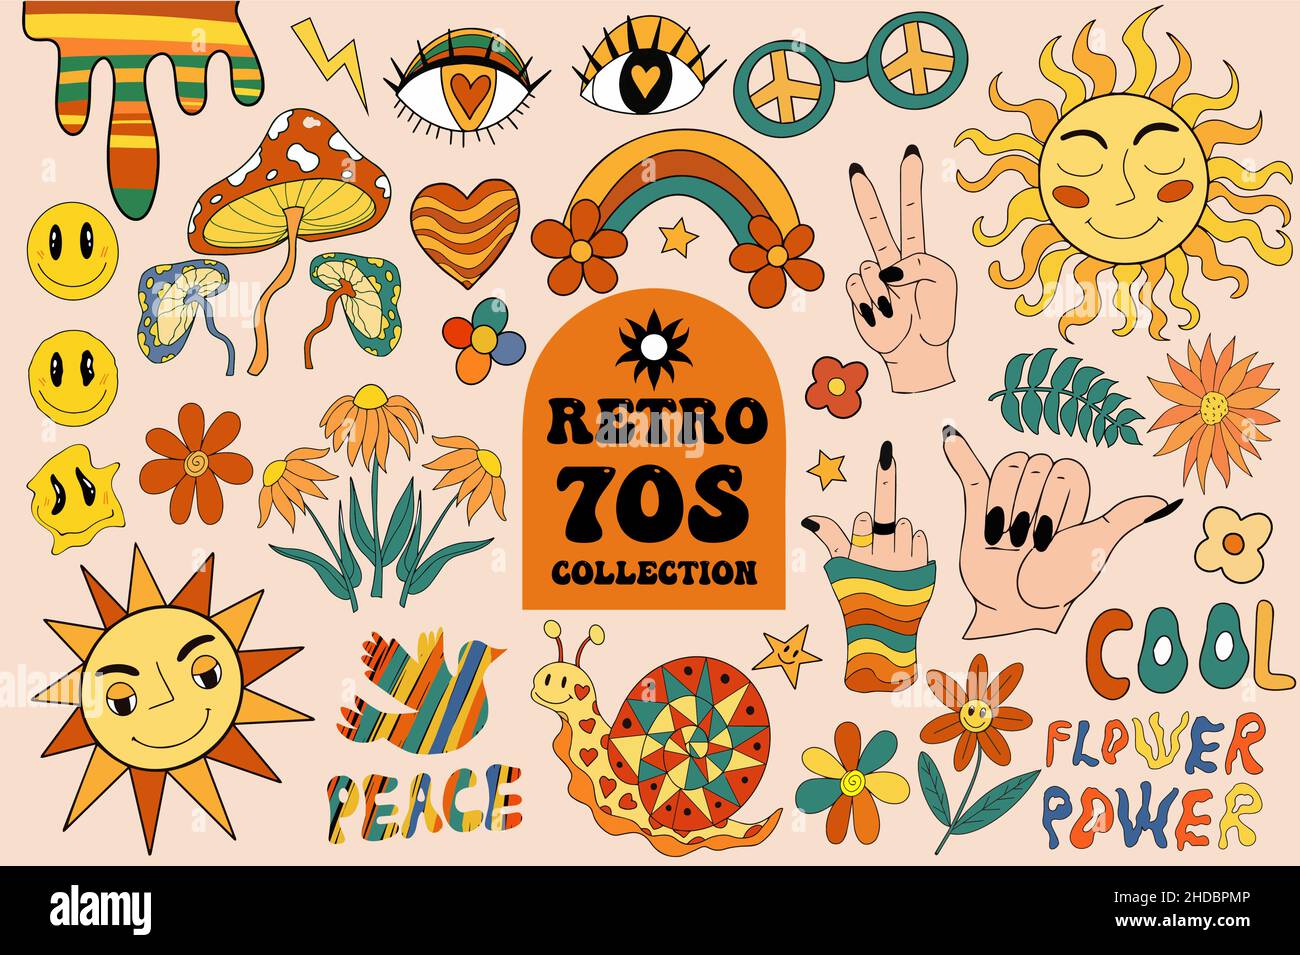 Gelijkenis volgens adviseren Retro 70s vibe, hippie stickers, psychedelic groovy elements. Cartoon funky  flowers, rainbow, vintage hippy style element. Vector illustration Stock  Vector Image & Art - Alamy